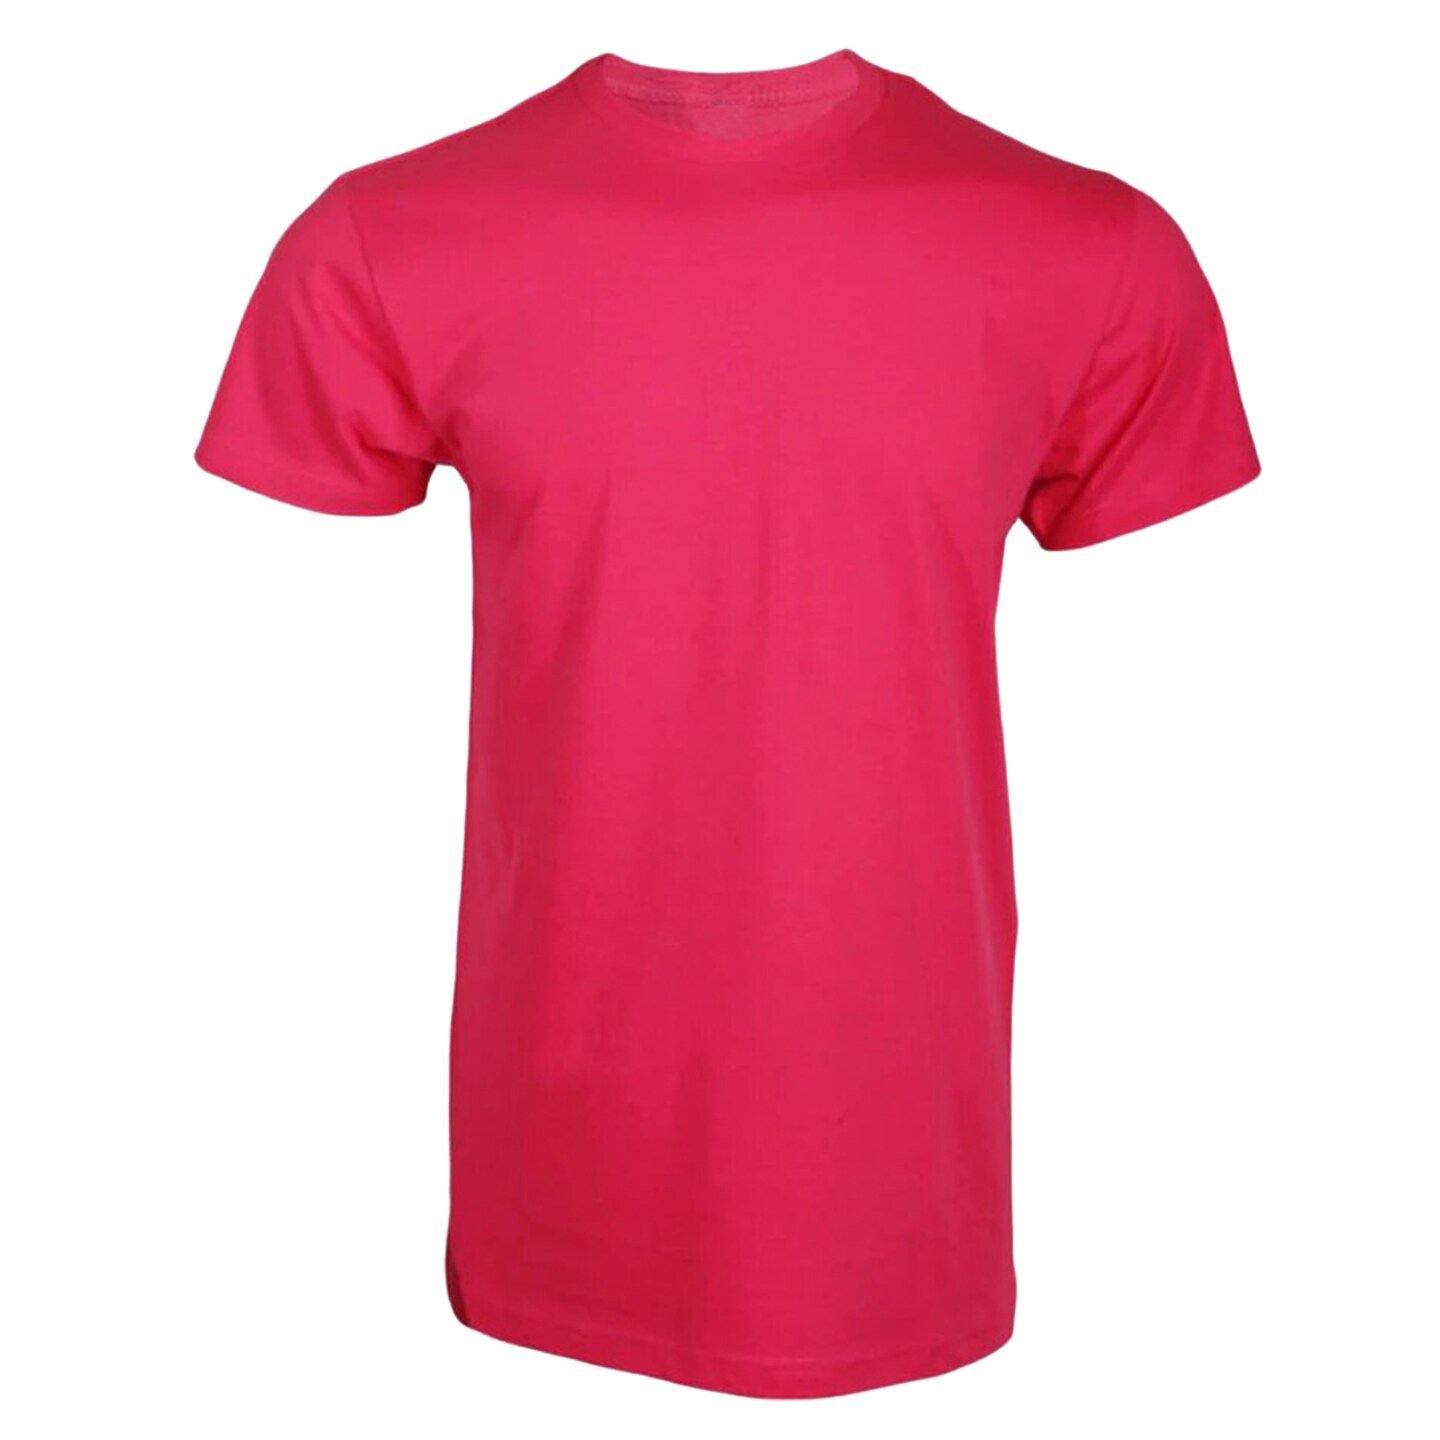 Oversized short sleeve T-shirt - T-shirts - Men